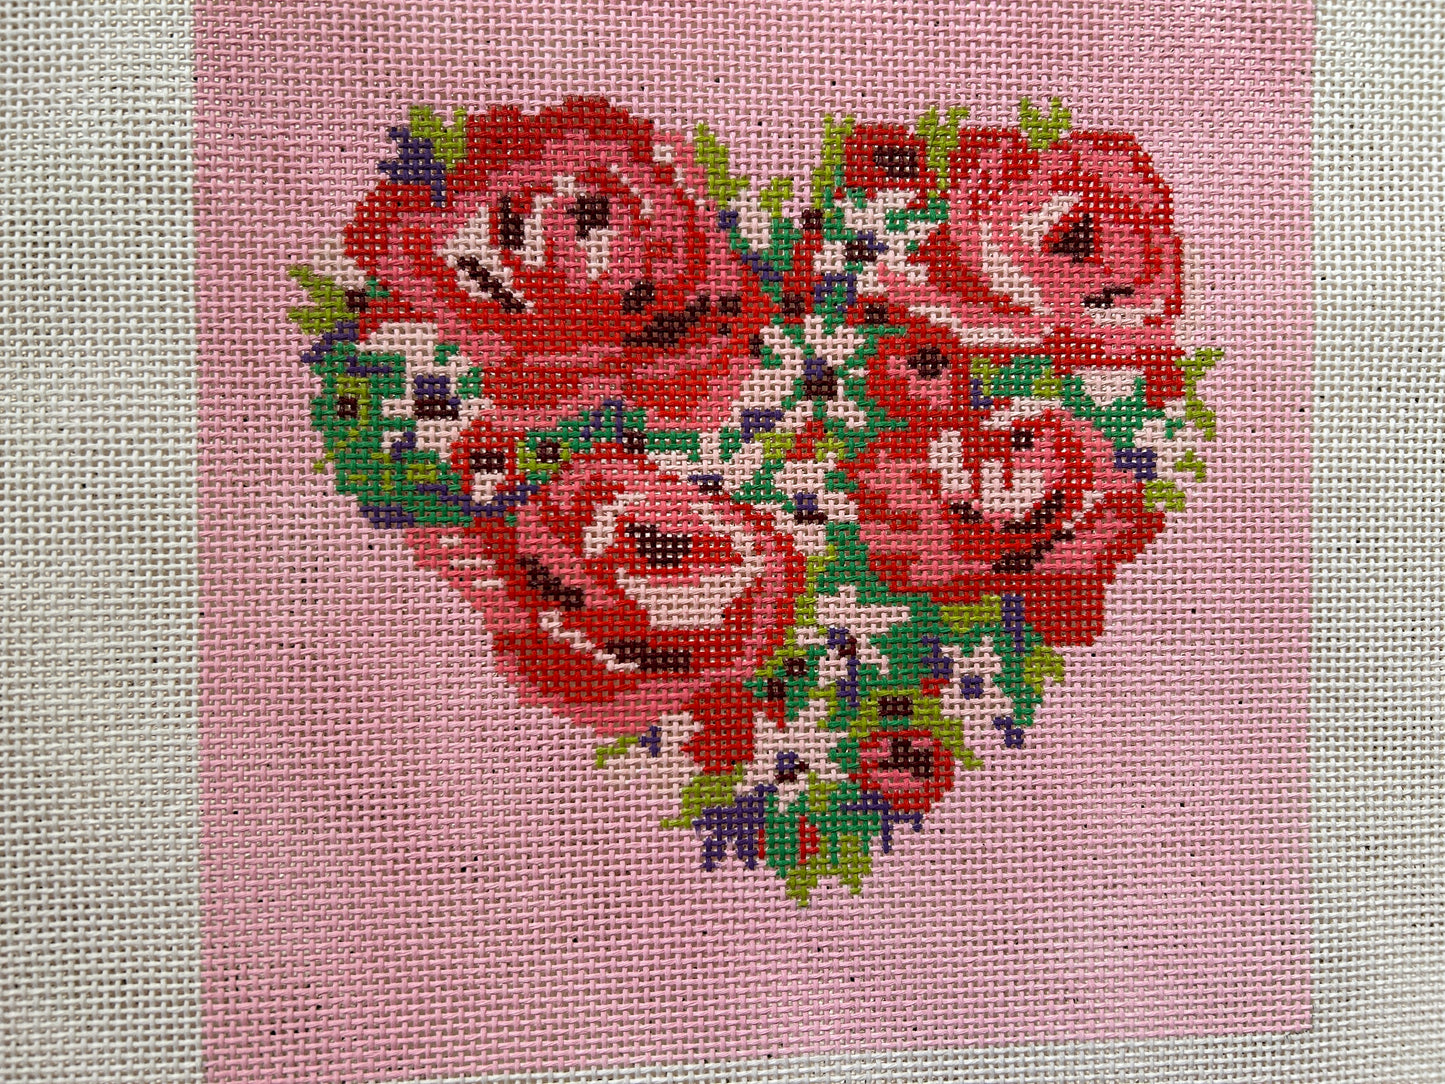 Flower Heart Canvas - small